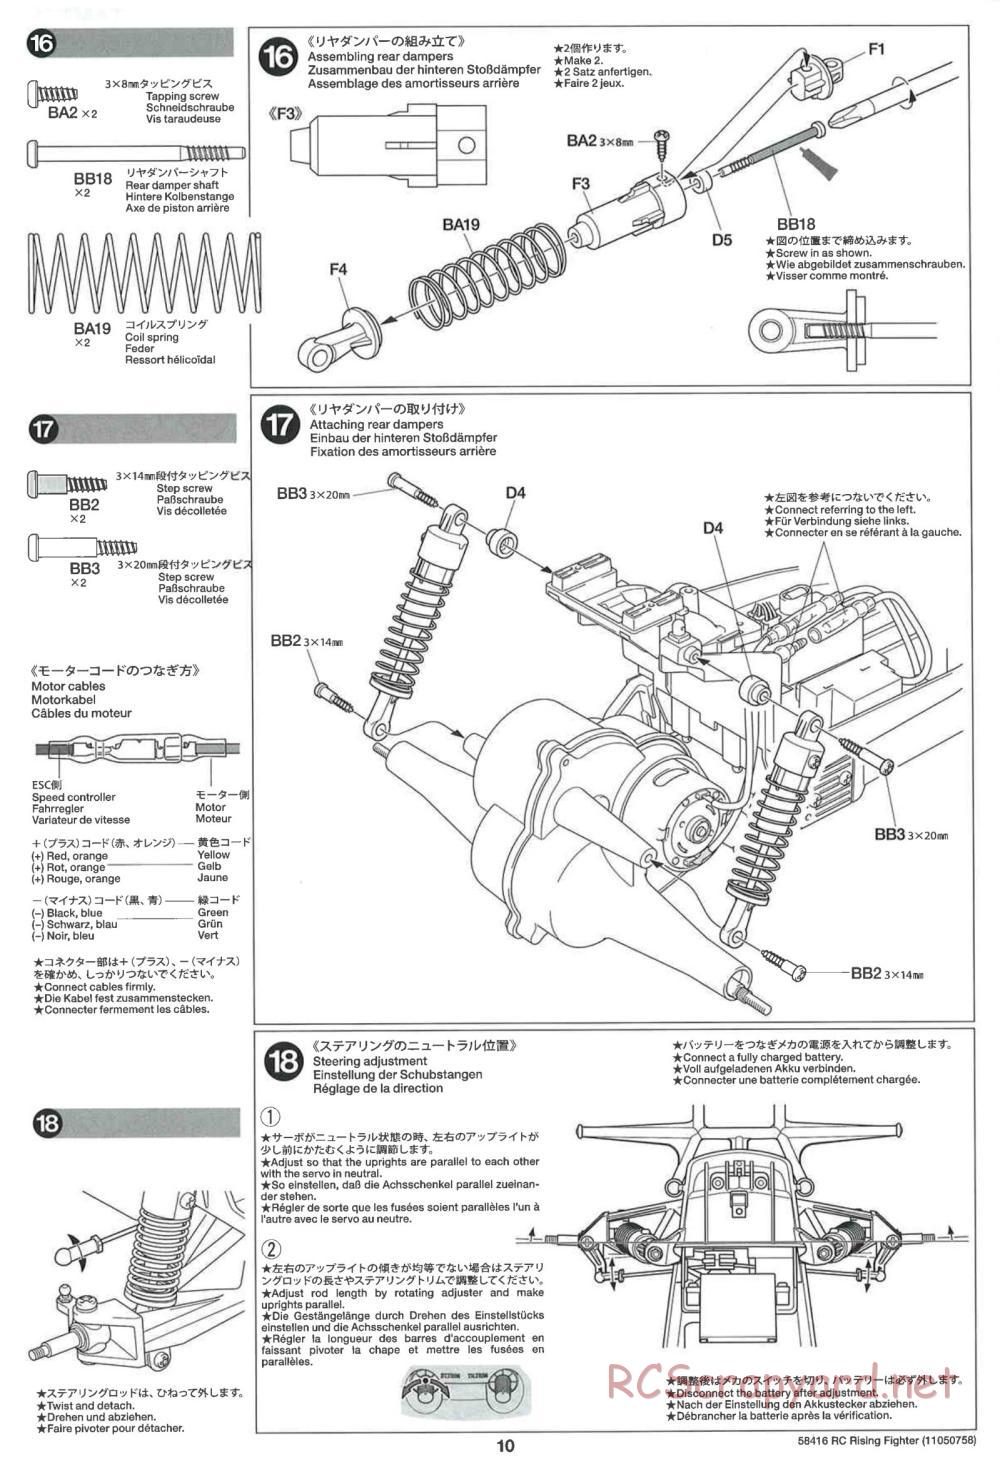 Tamiya - Rising Fighter Chassis - Manual - Page 10